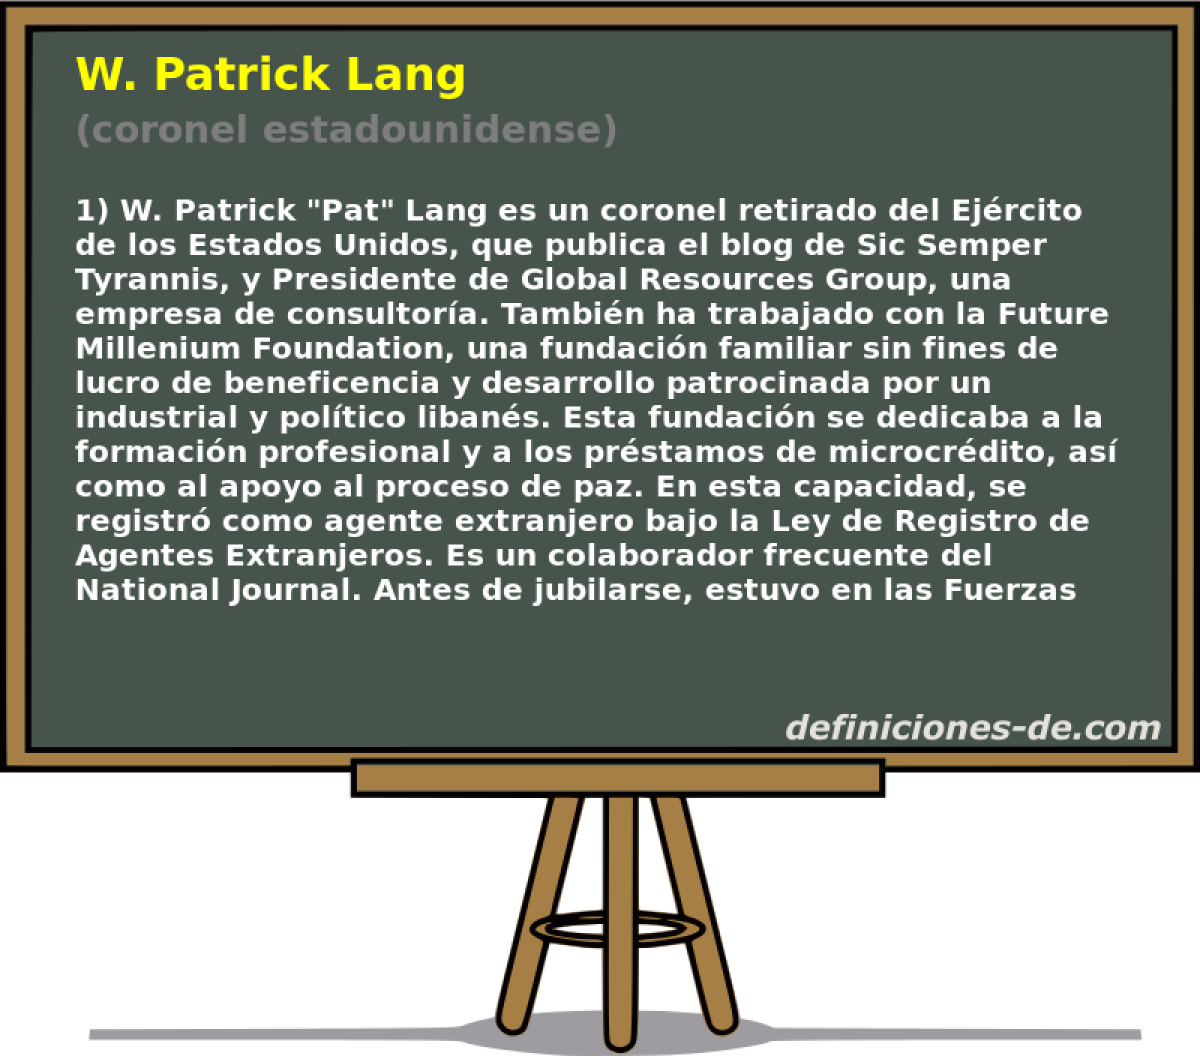 W. Patrick Lang (coronel estadounidense)